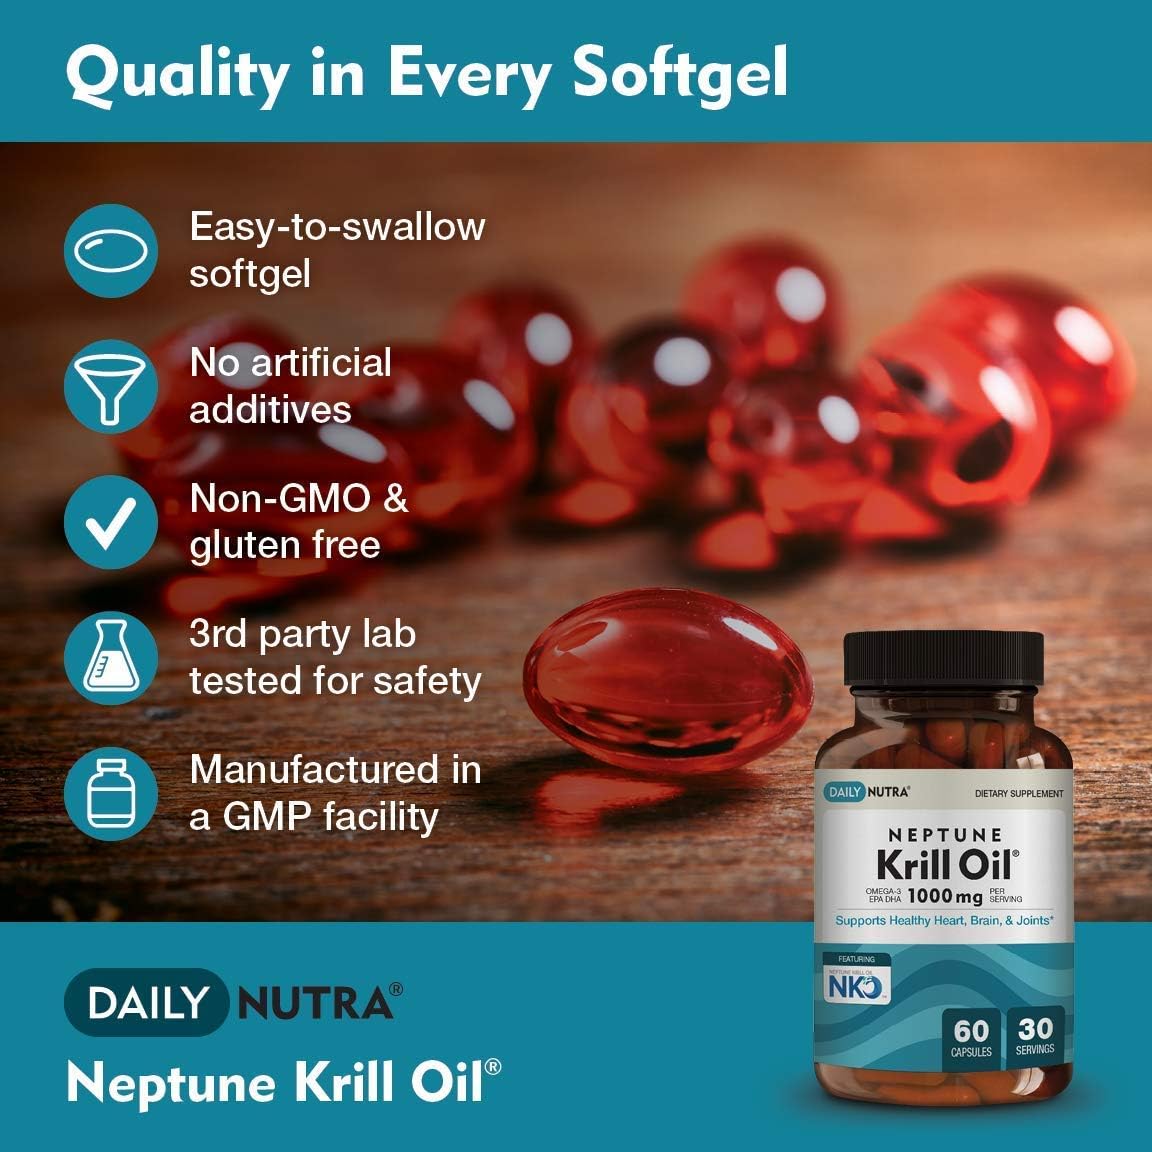  DailyNutra Neptune Krill Oil 1000mg - Antarctic Krill Oil O